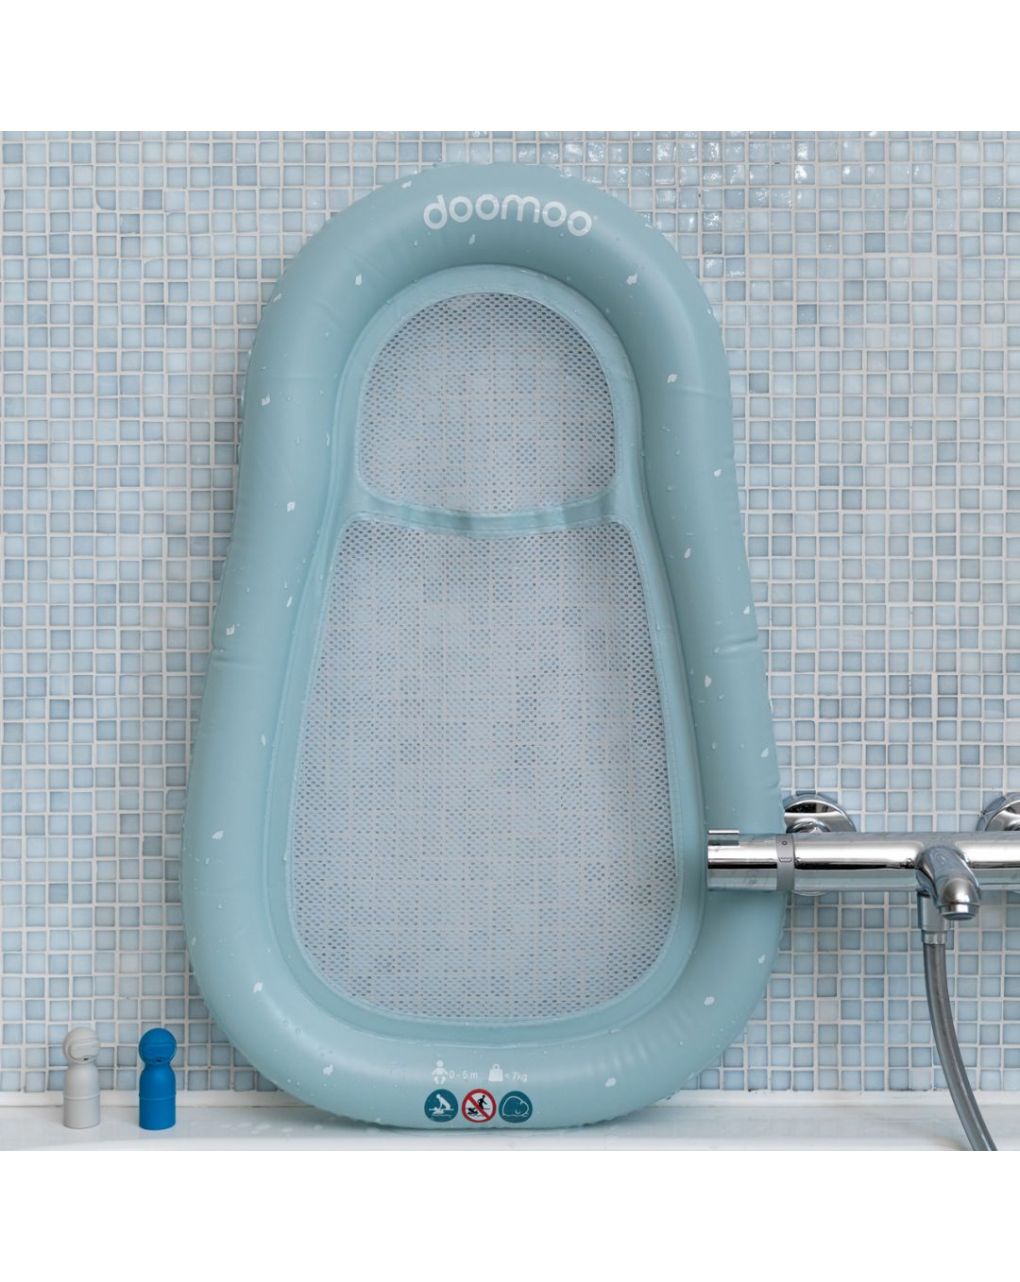 Materassino bagno gonfiabile azzurro - doomooo - Doomoo